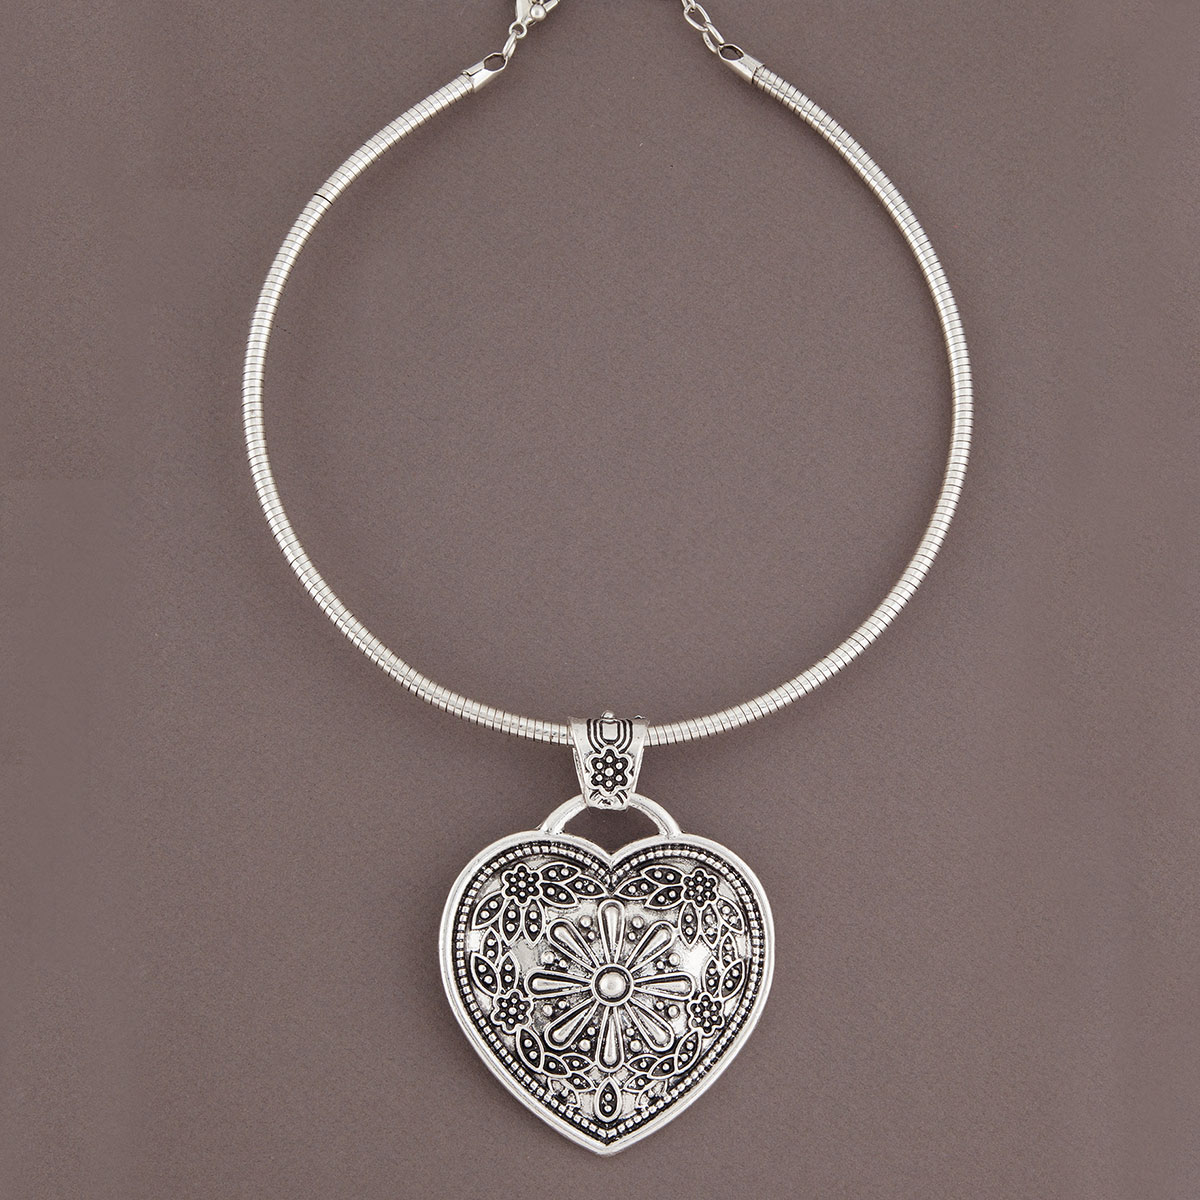 Antique Silver Heart Medallion Necklace